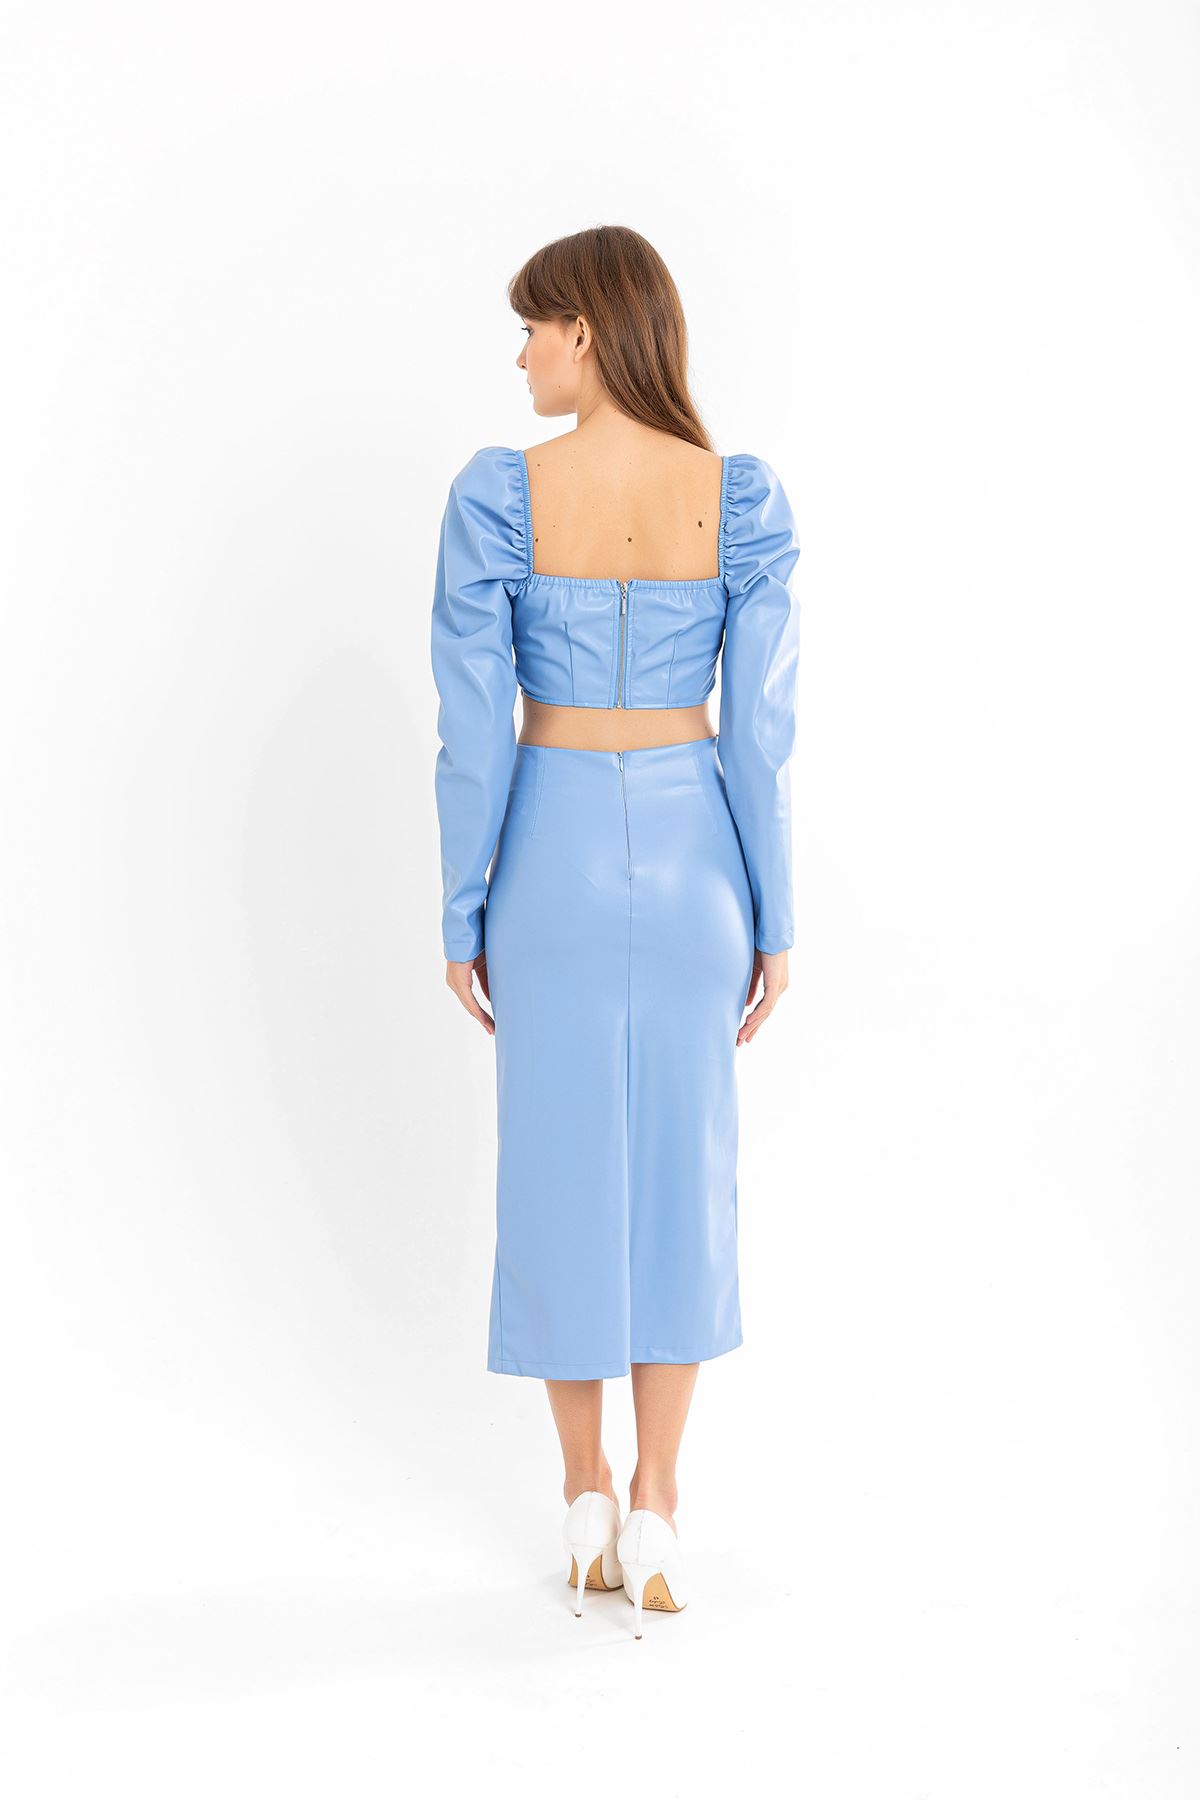 Leather Fabric Above Knee Shirred Slit Women'S Skirt - Blue